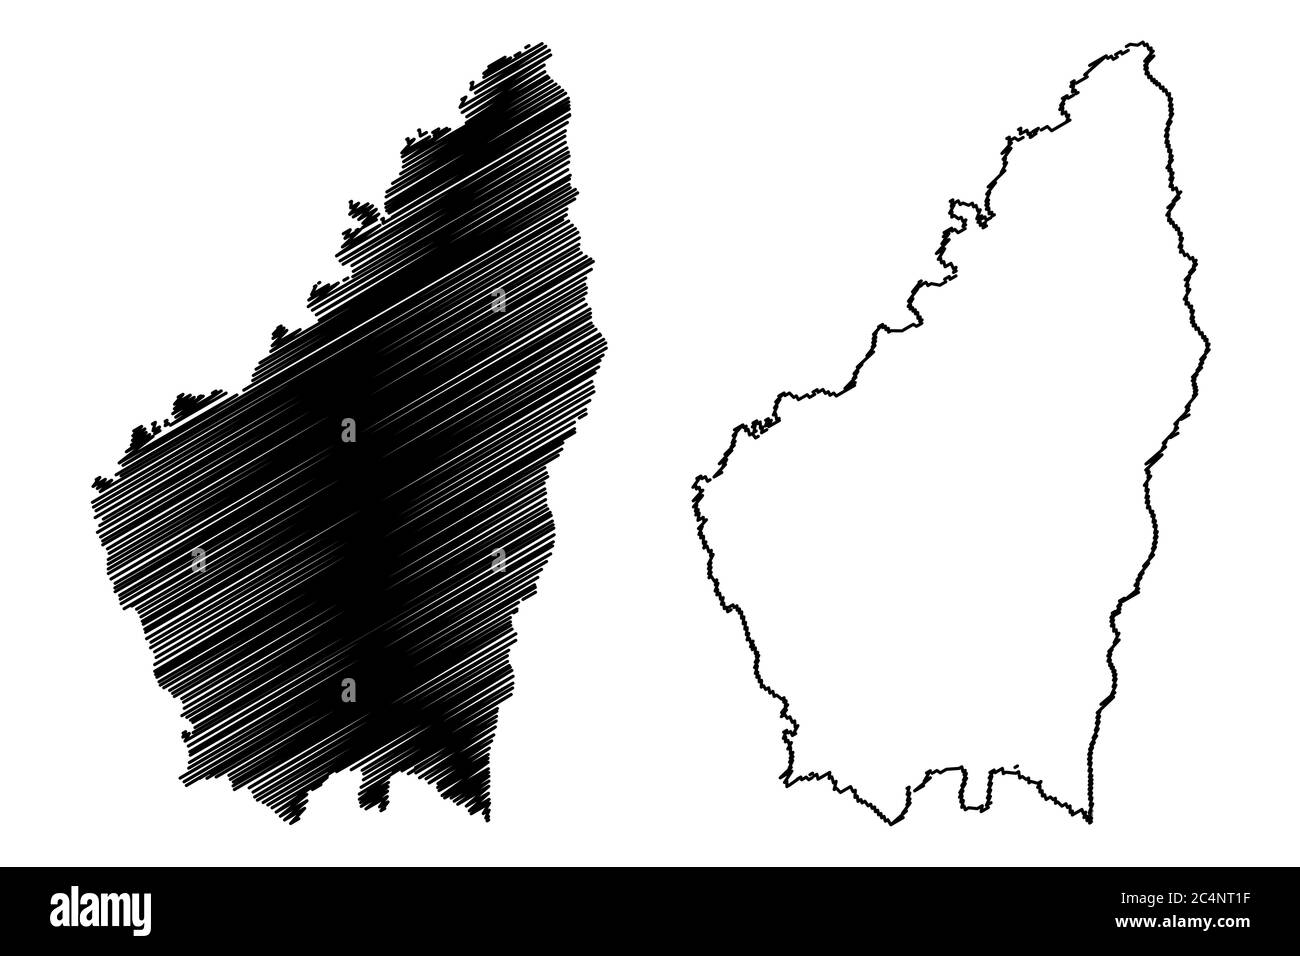 Departamento Ardeche (Frankreich, Frankreich, Republik Frankreich, Region Auvergne-Rhone-Alpes, ARA) Karte Vektorgrafik, Skizze Ardecha Karte Stock Vektor